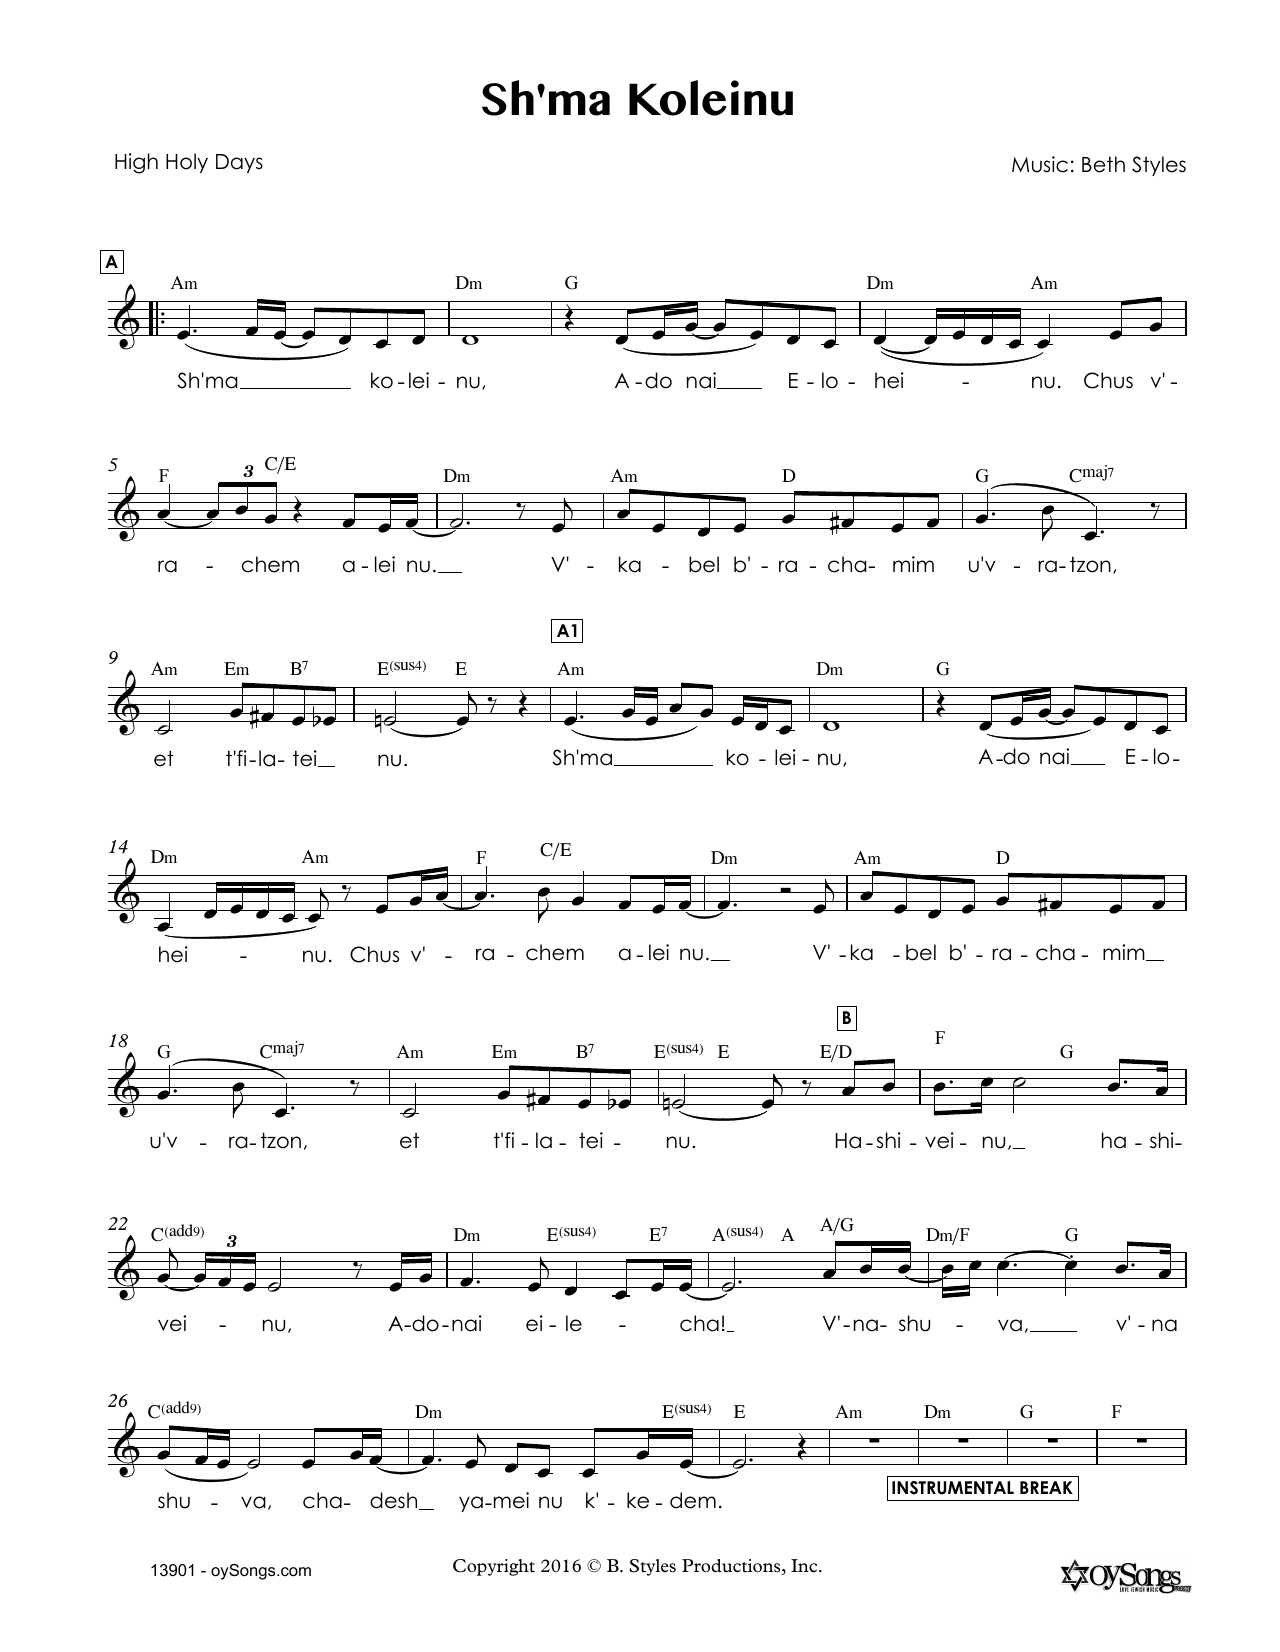 Beth Styles Sh'ma Koleinu Sheet Music Notes & Chords for Melody Line, Lyrics & Chords - Download or Print PDF